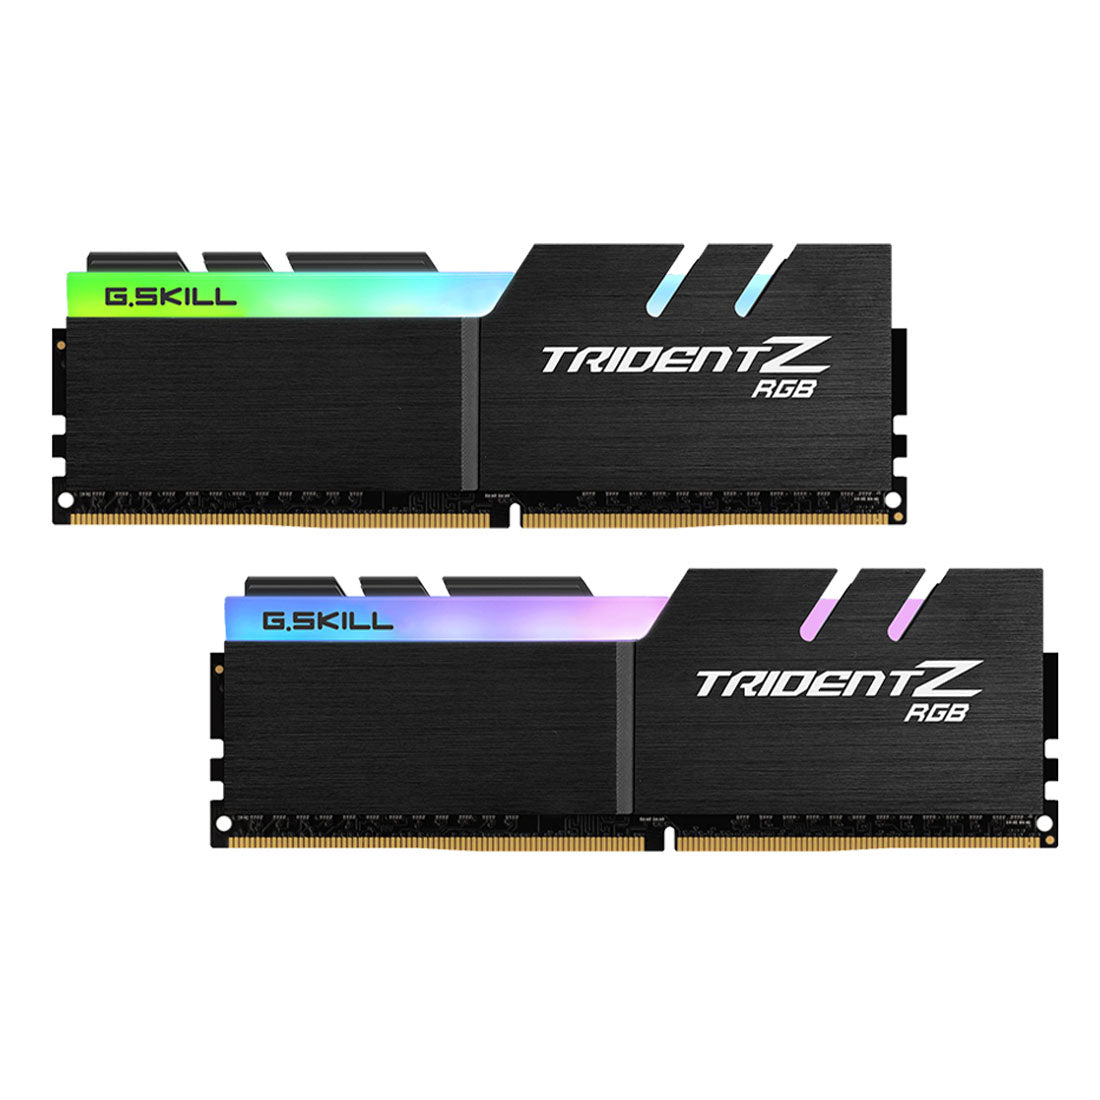 G.SKILL Trident Z RGB 32GB(2x16GB) DDR4 RAM 3200MHz Desktop Memory